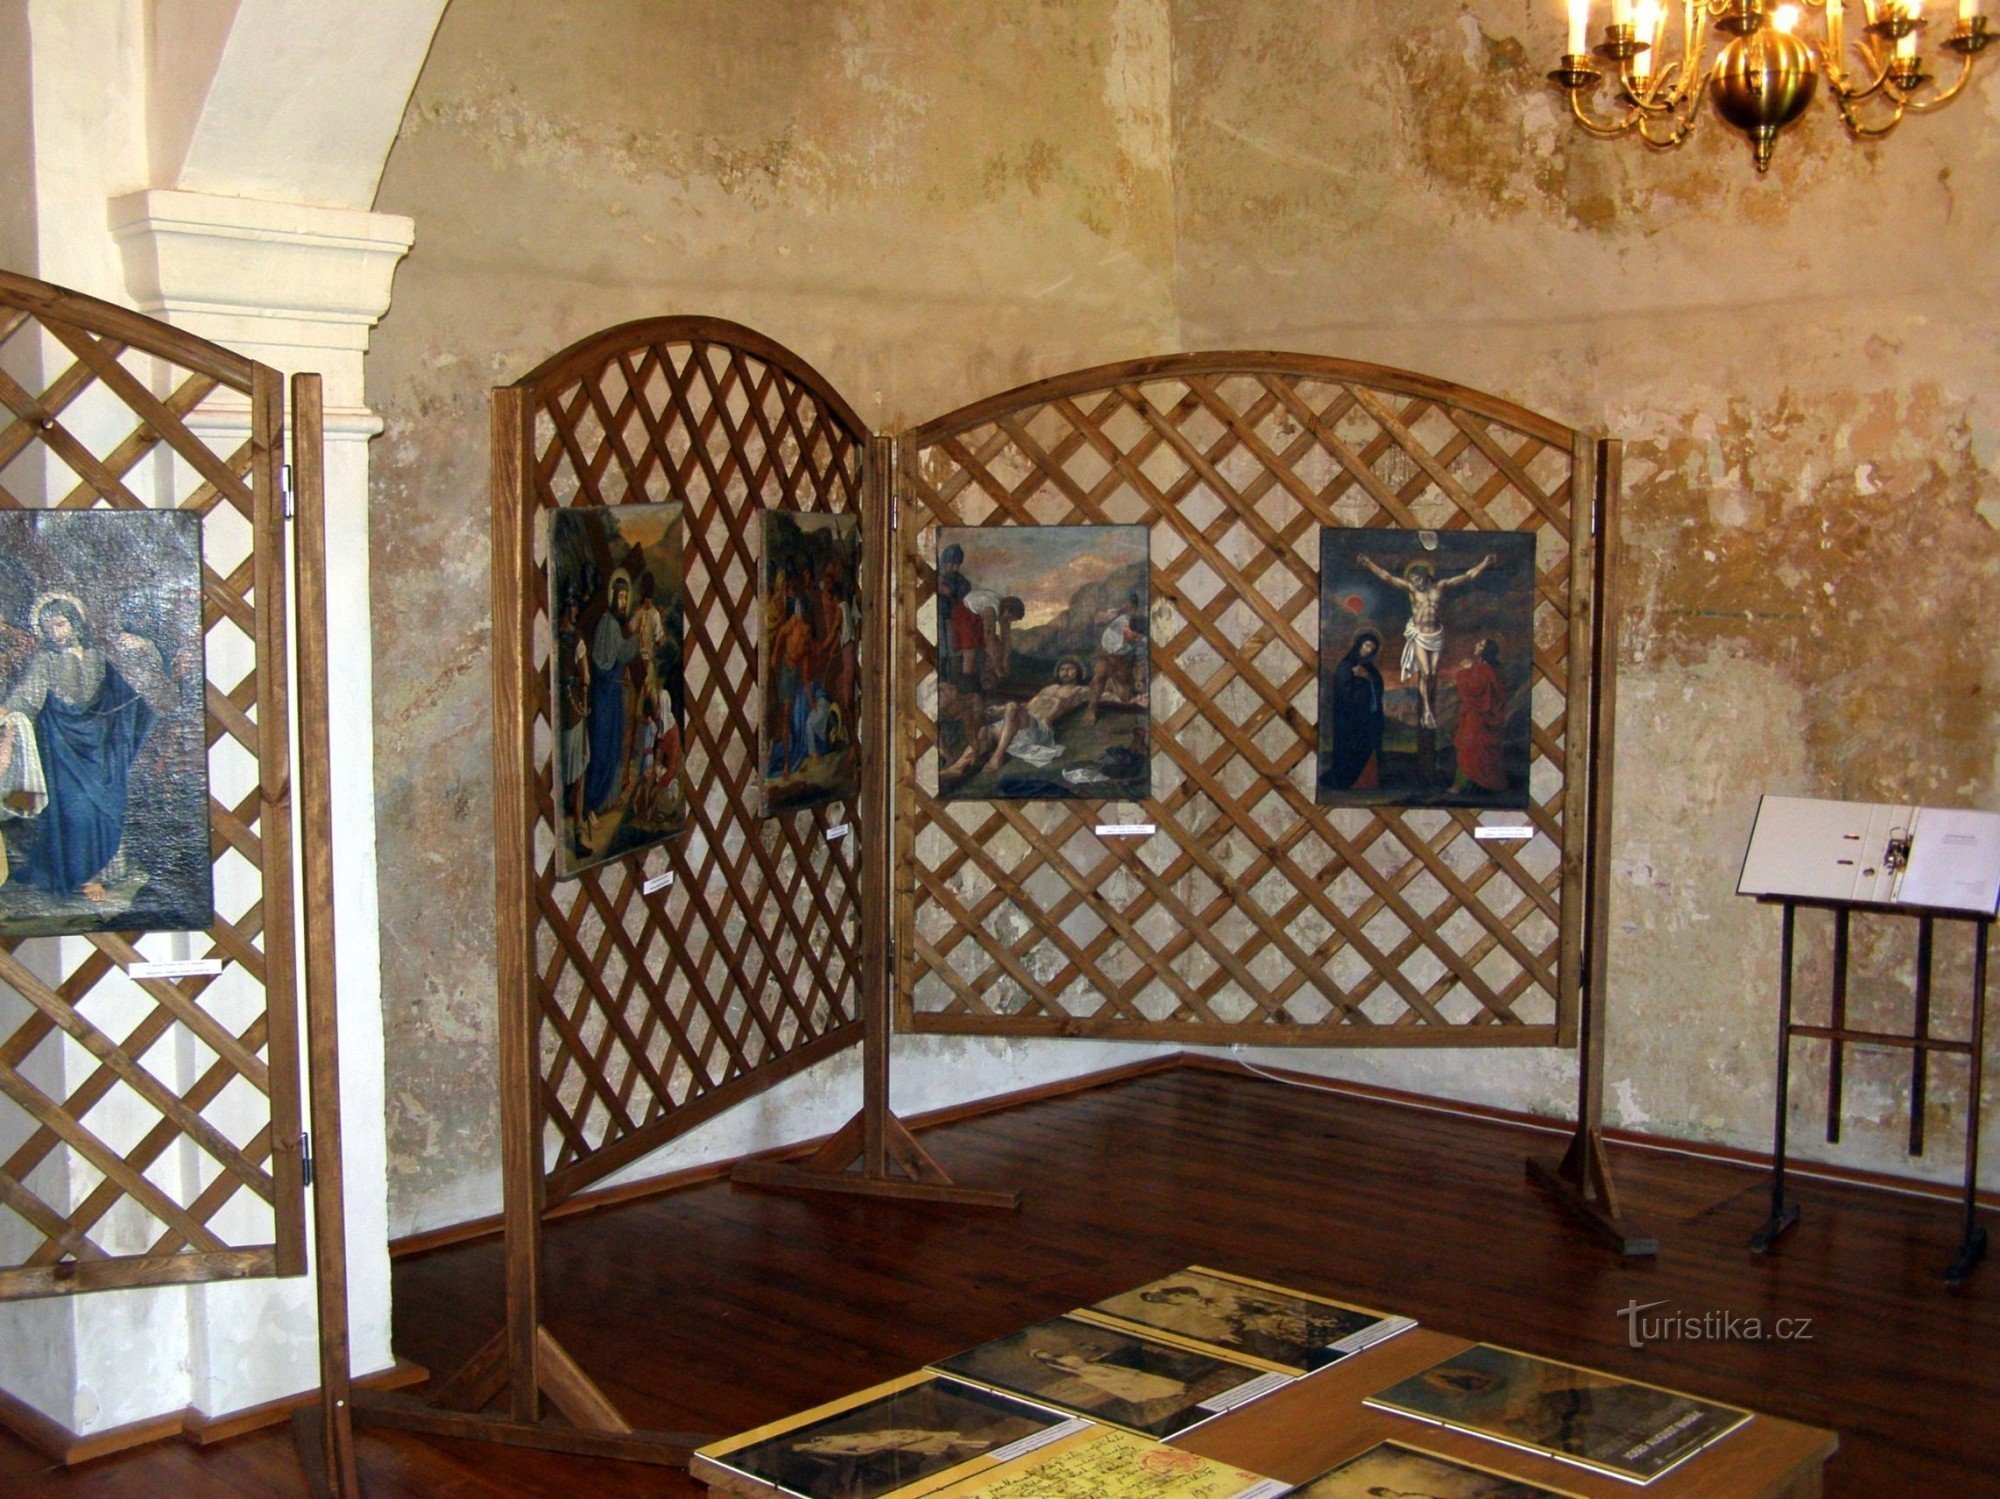 izložba u dvorcu